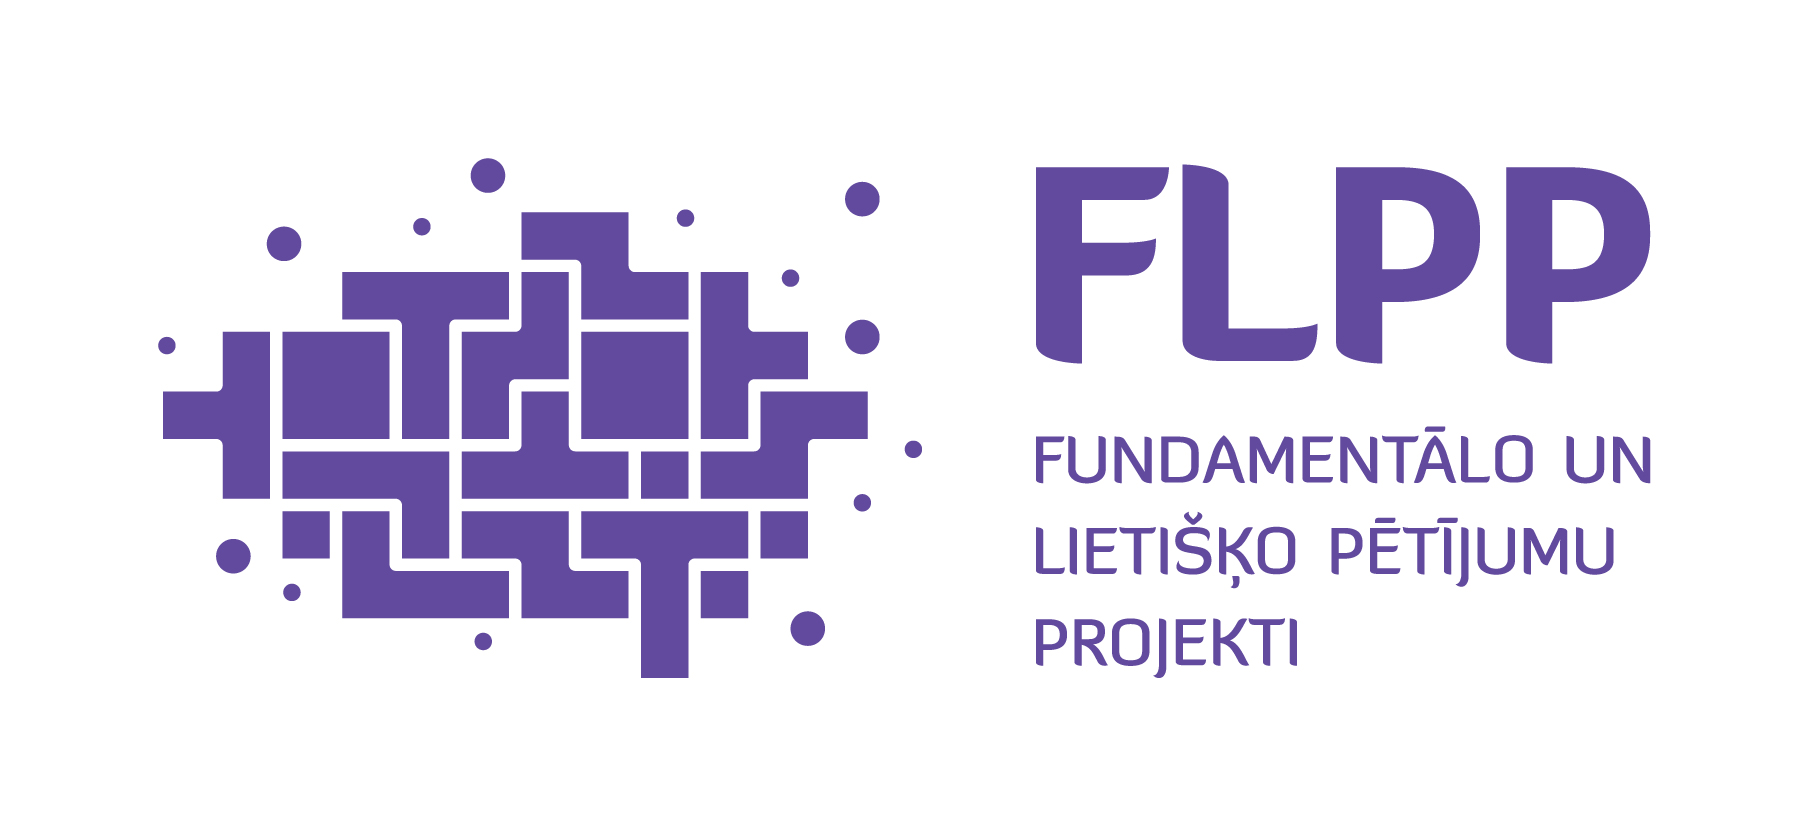 FLPP_logo